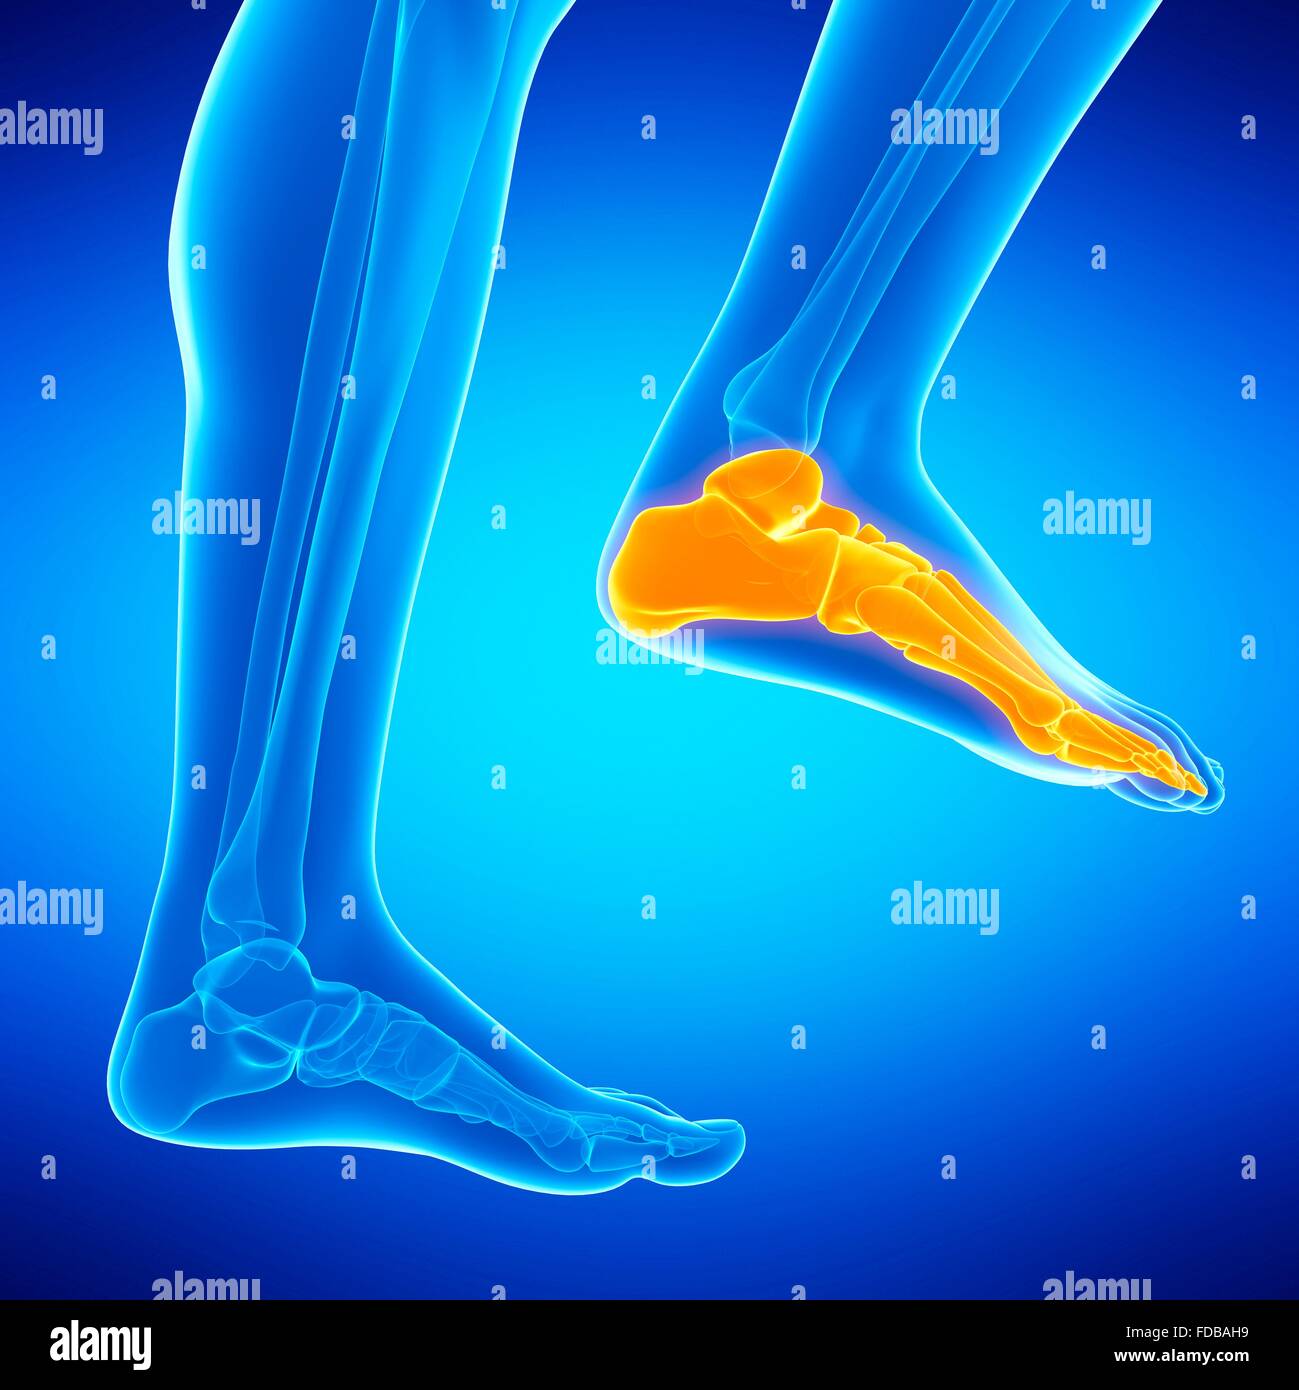 Human foot bones, illustration. Stock Photo